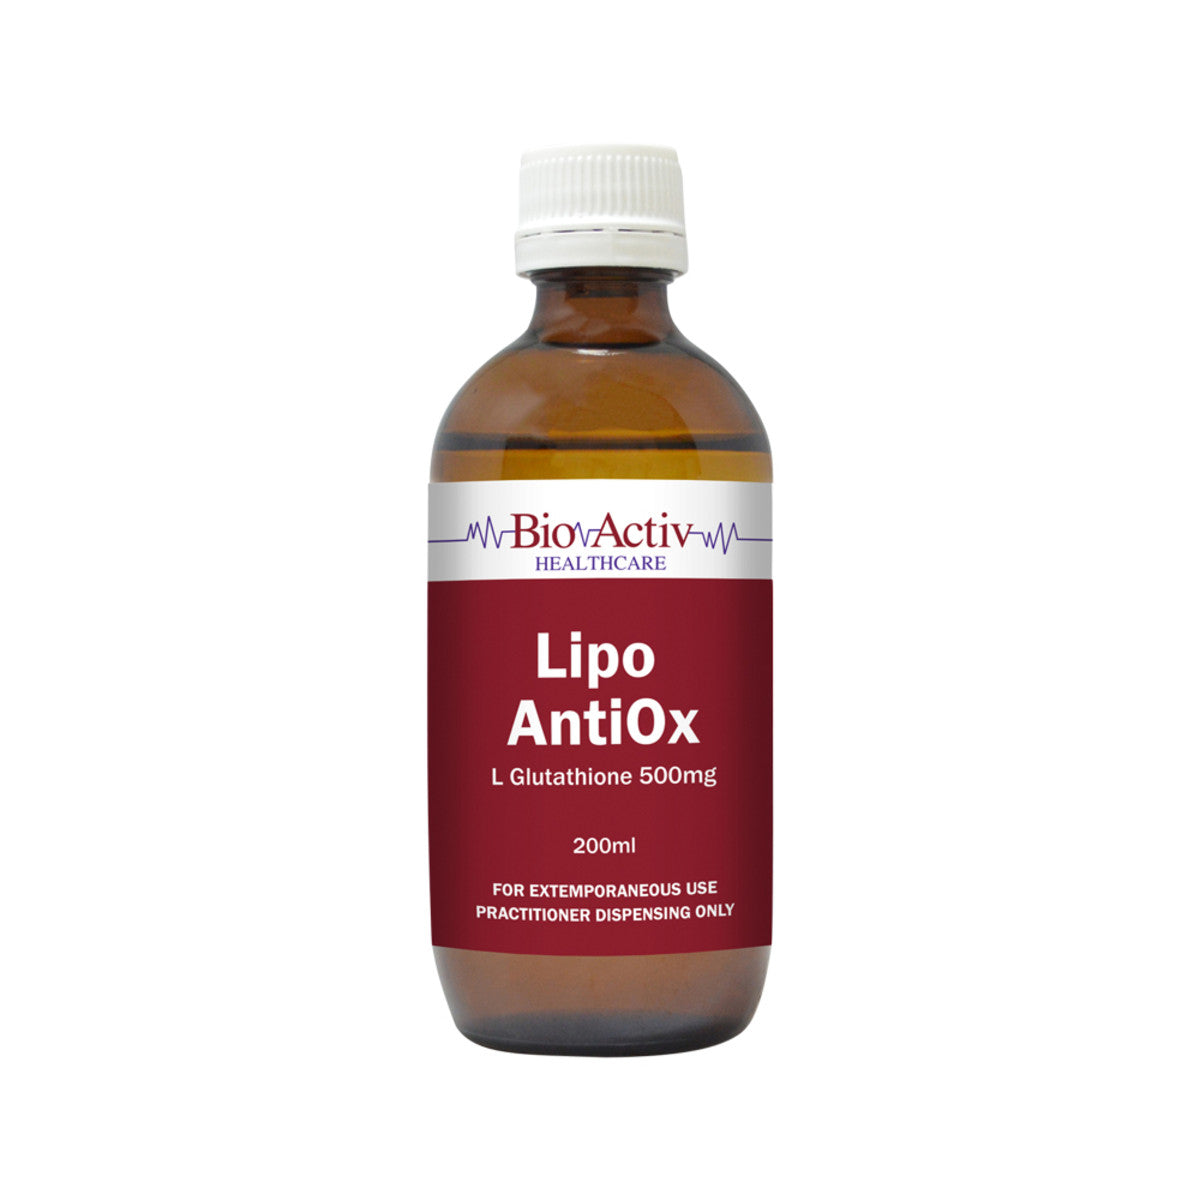 BioActiv Healthcare - Lipo AntiOx (L Glutathione 500mg)